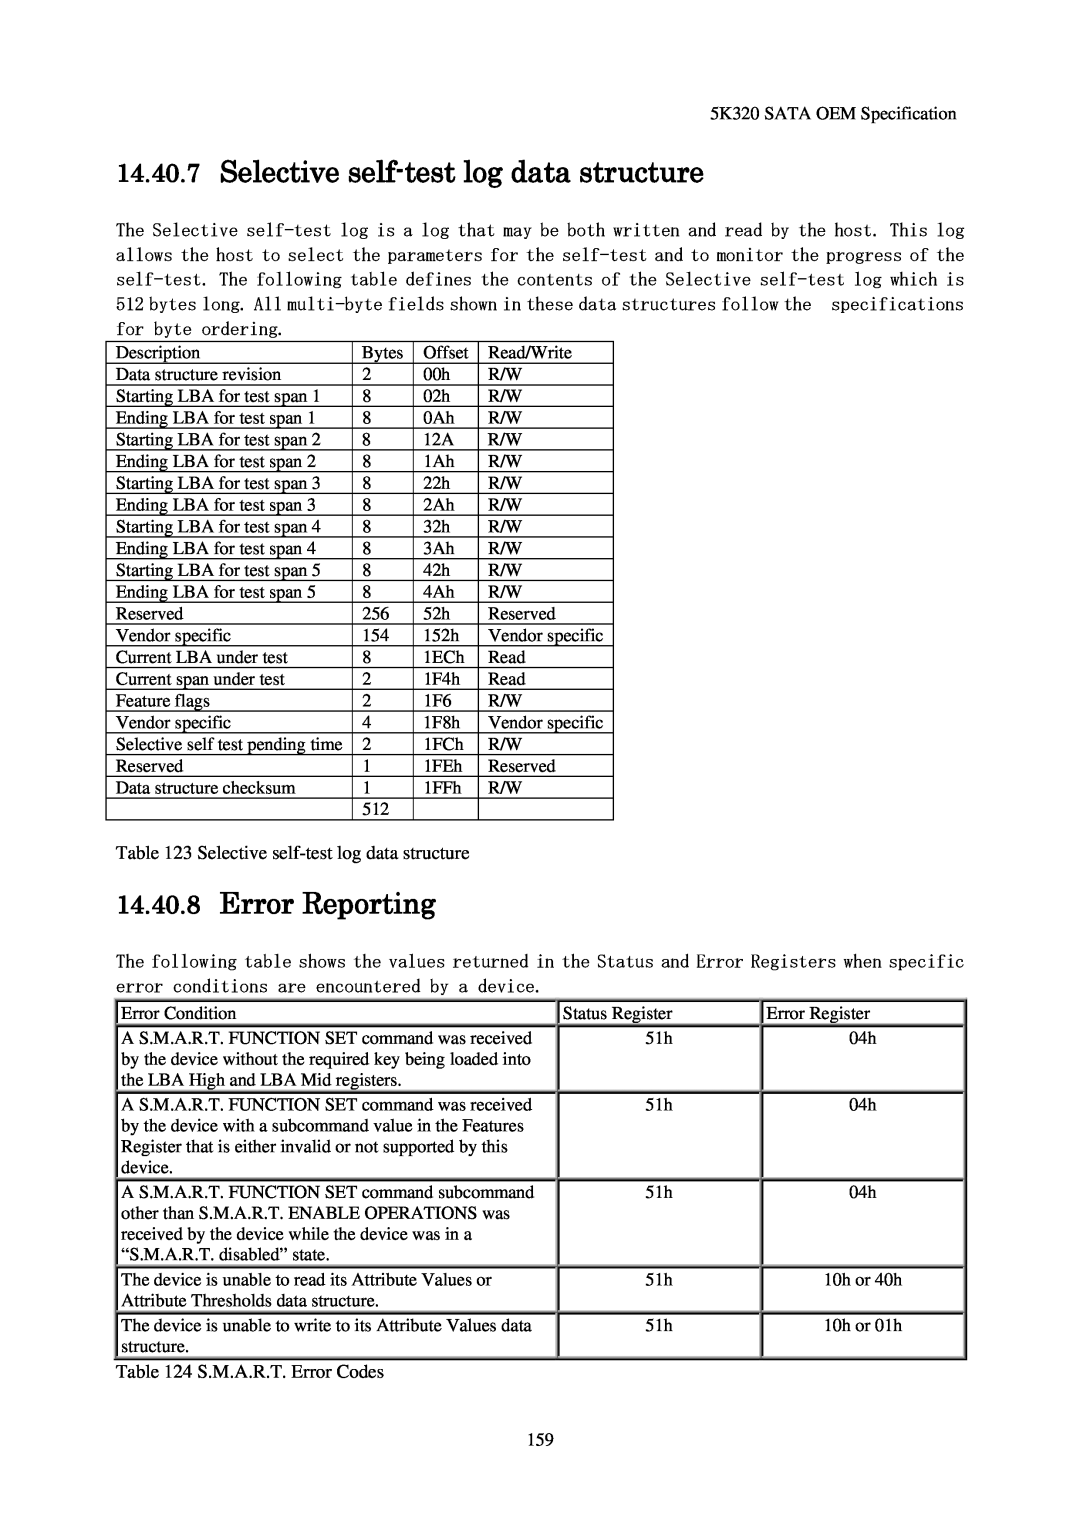 Hitachi HTS543216L9SA00 manual 14.40.7Selective self-testlog data structure, 14.40.8Error Reporting, S.M.A.R.T. Error Codes 